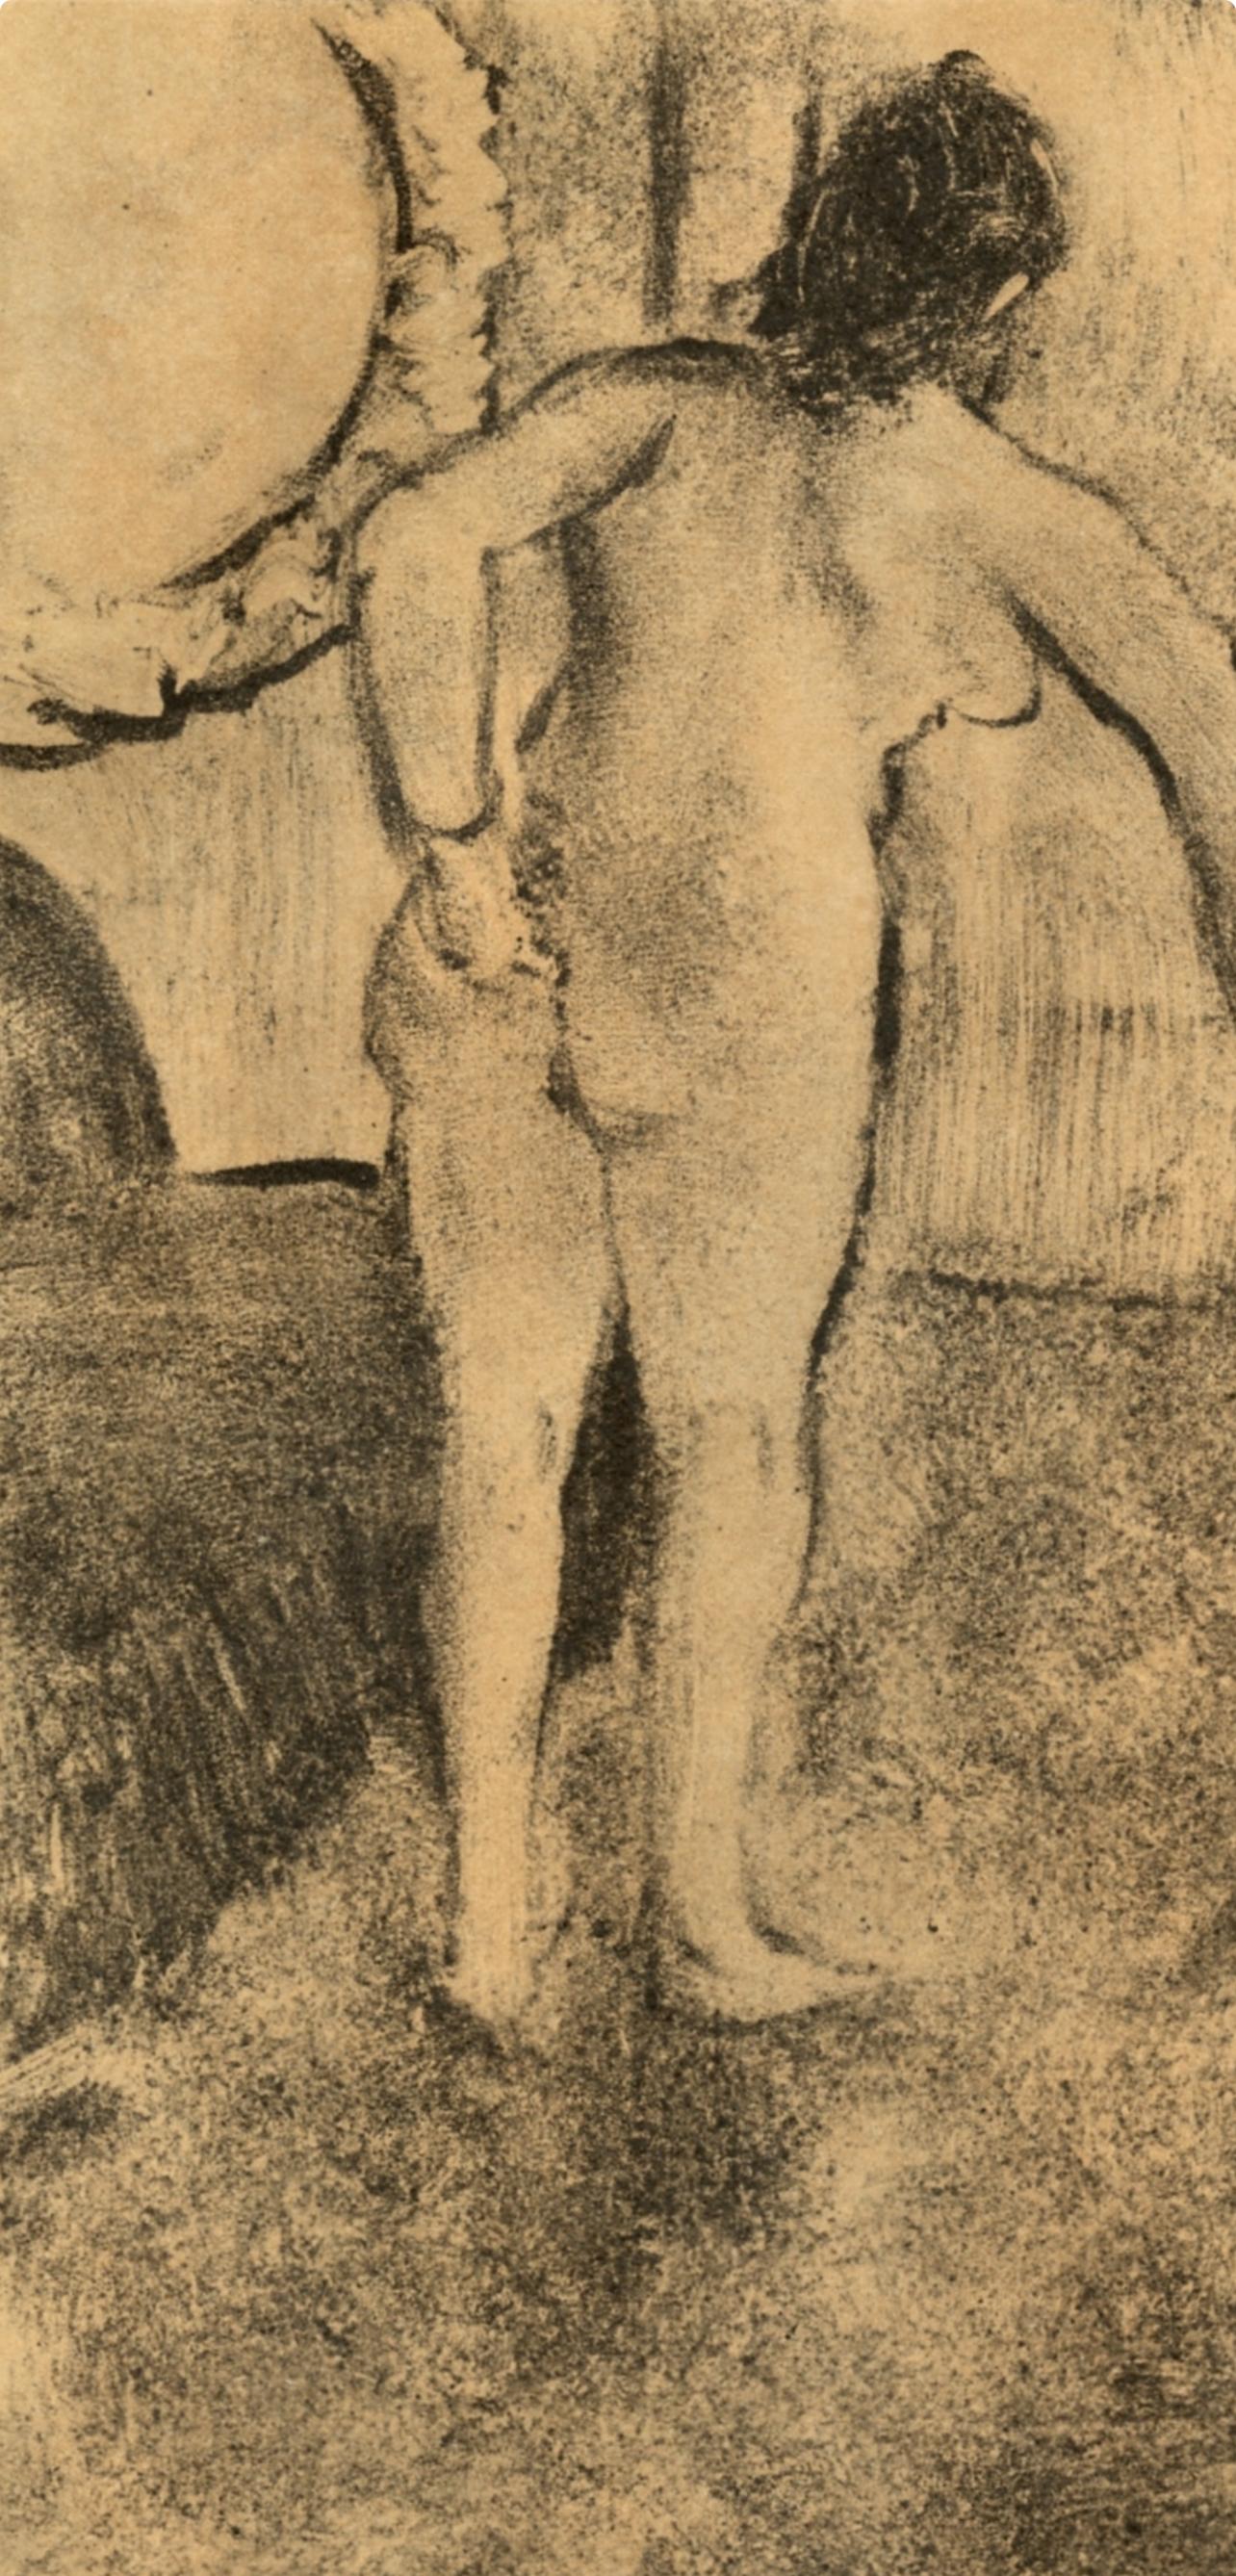 Degas, Nu debout, Les Monotypes (after) - Impressionist Print by Edgar Degas